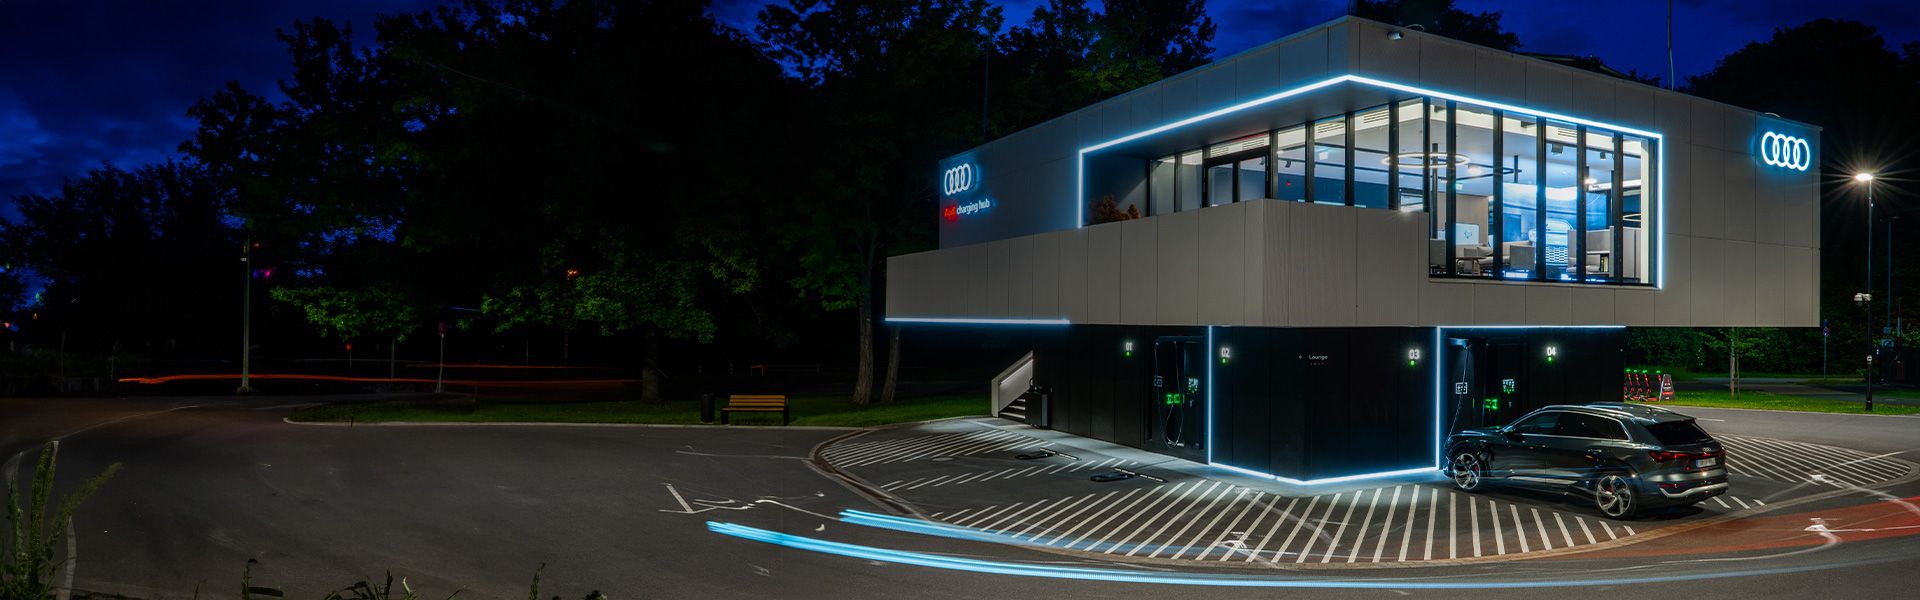 The illuminated Audi charging hub in Nuremberg at night